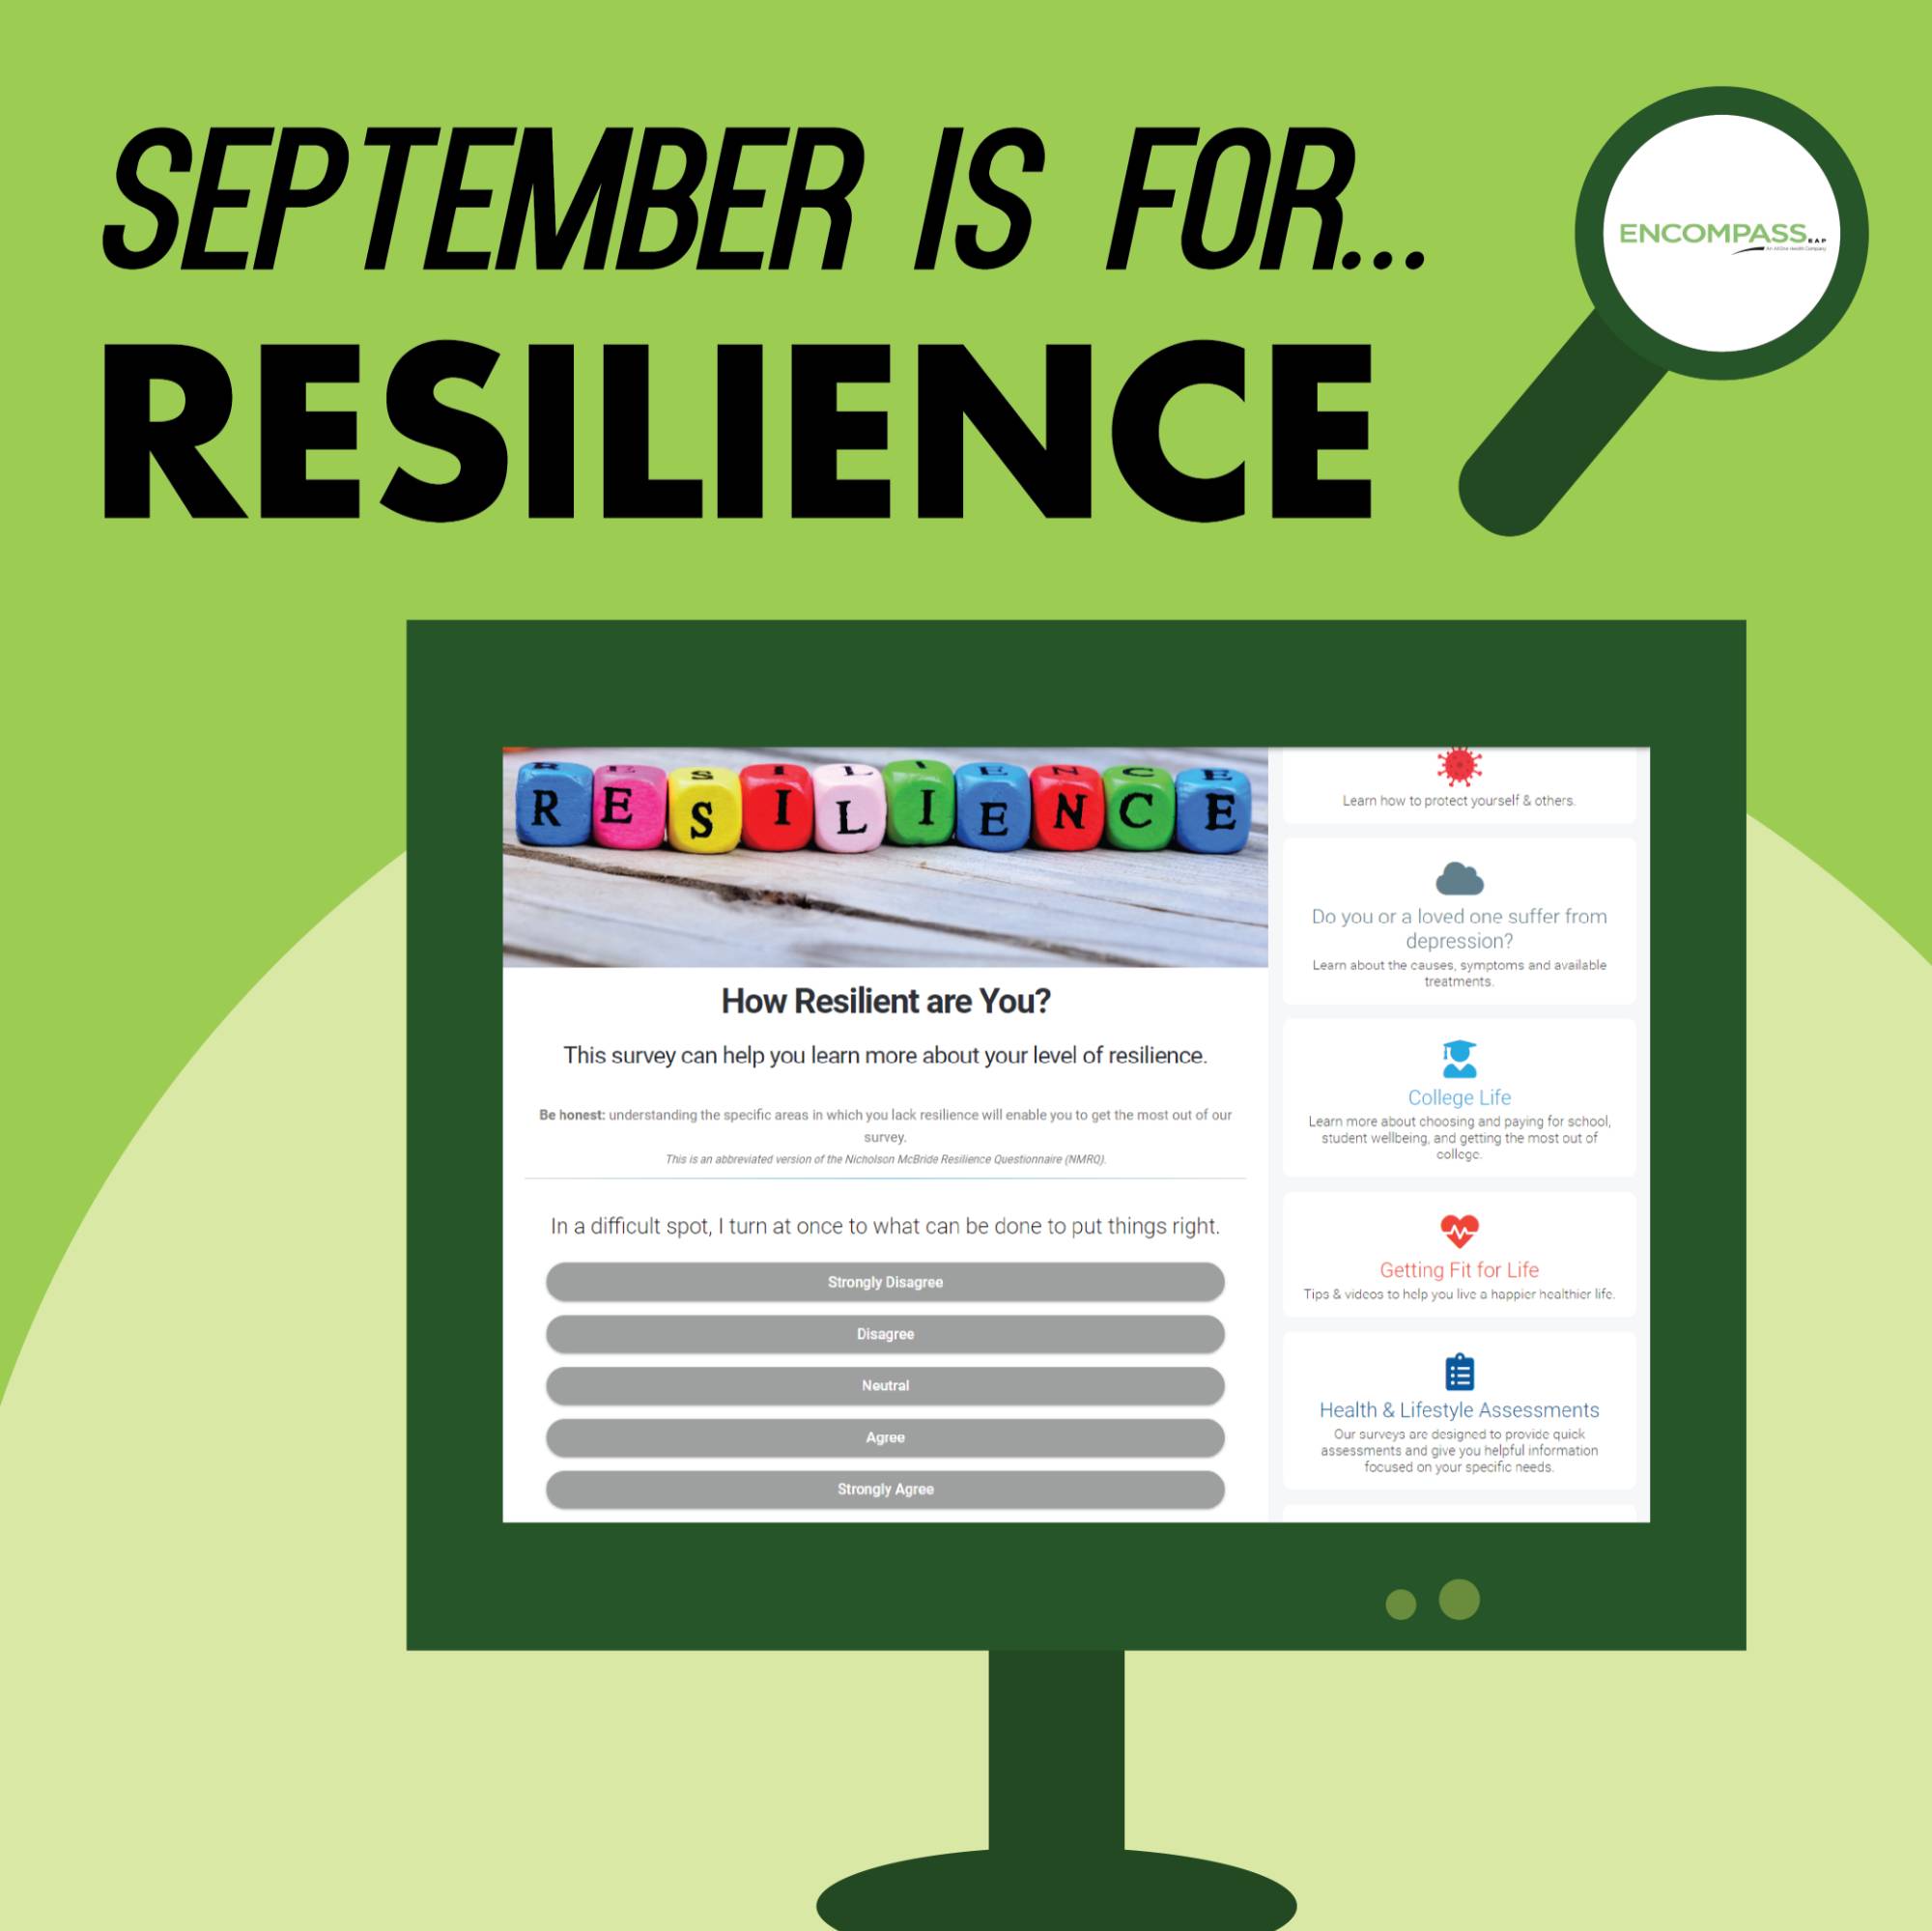 September is for Resilience